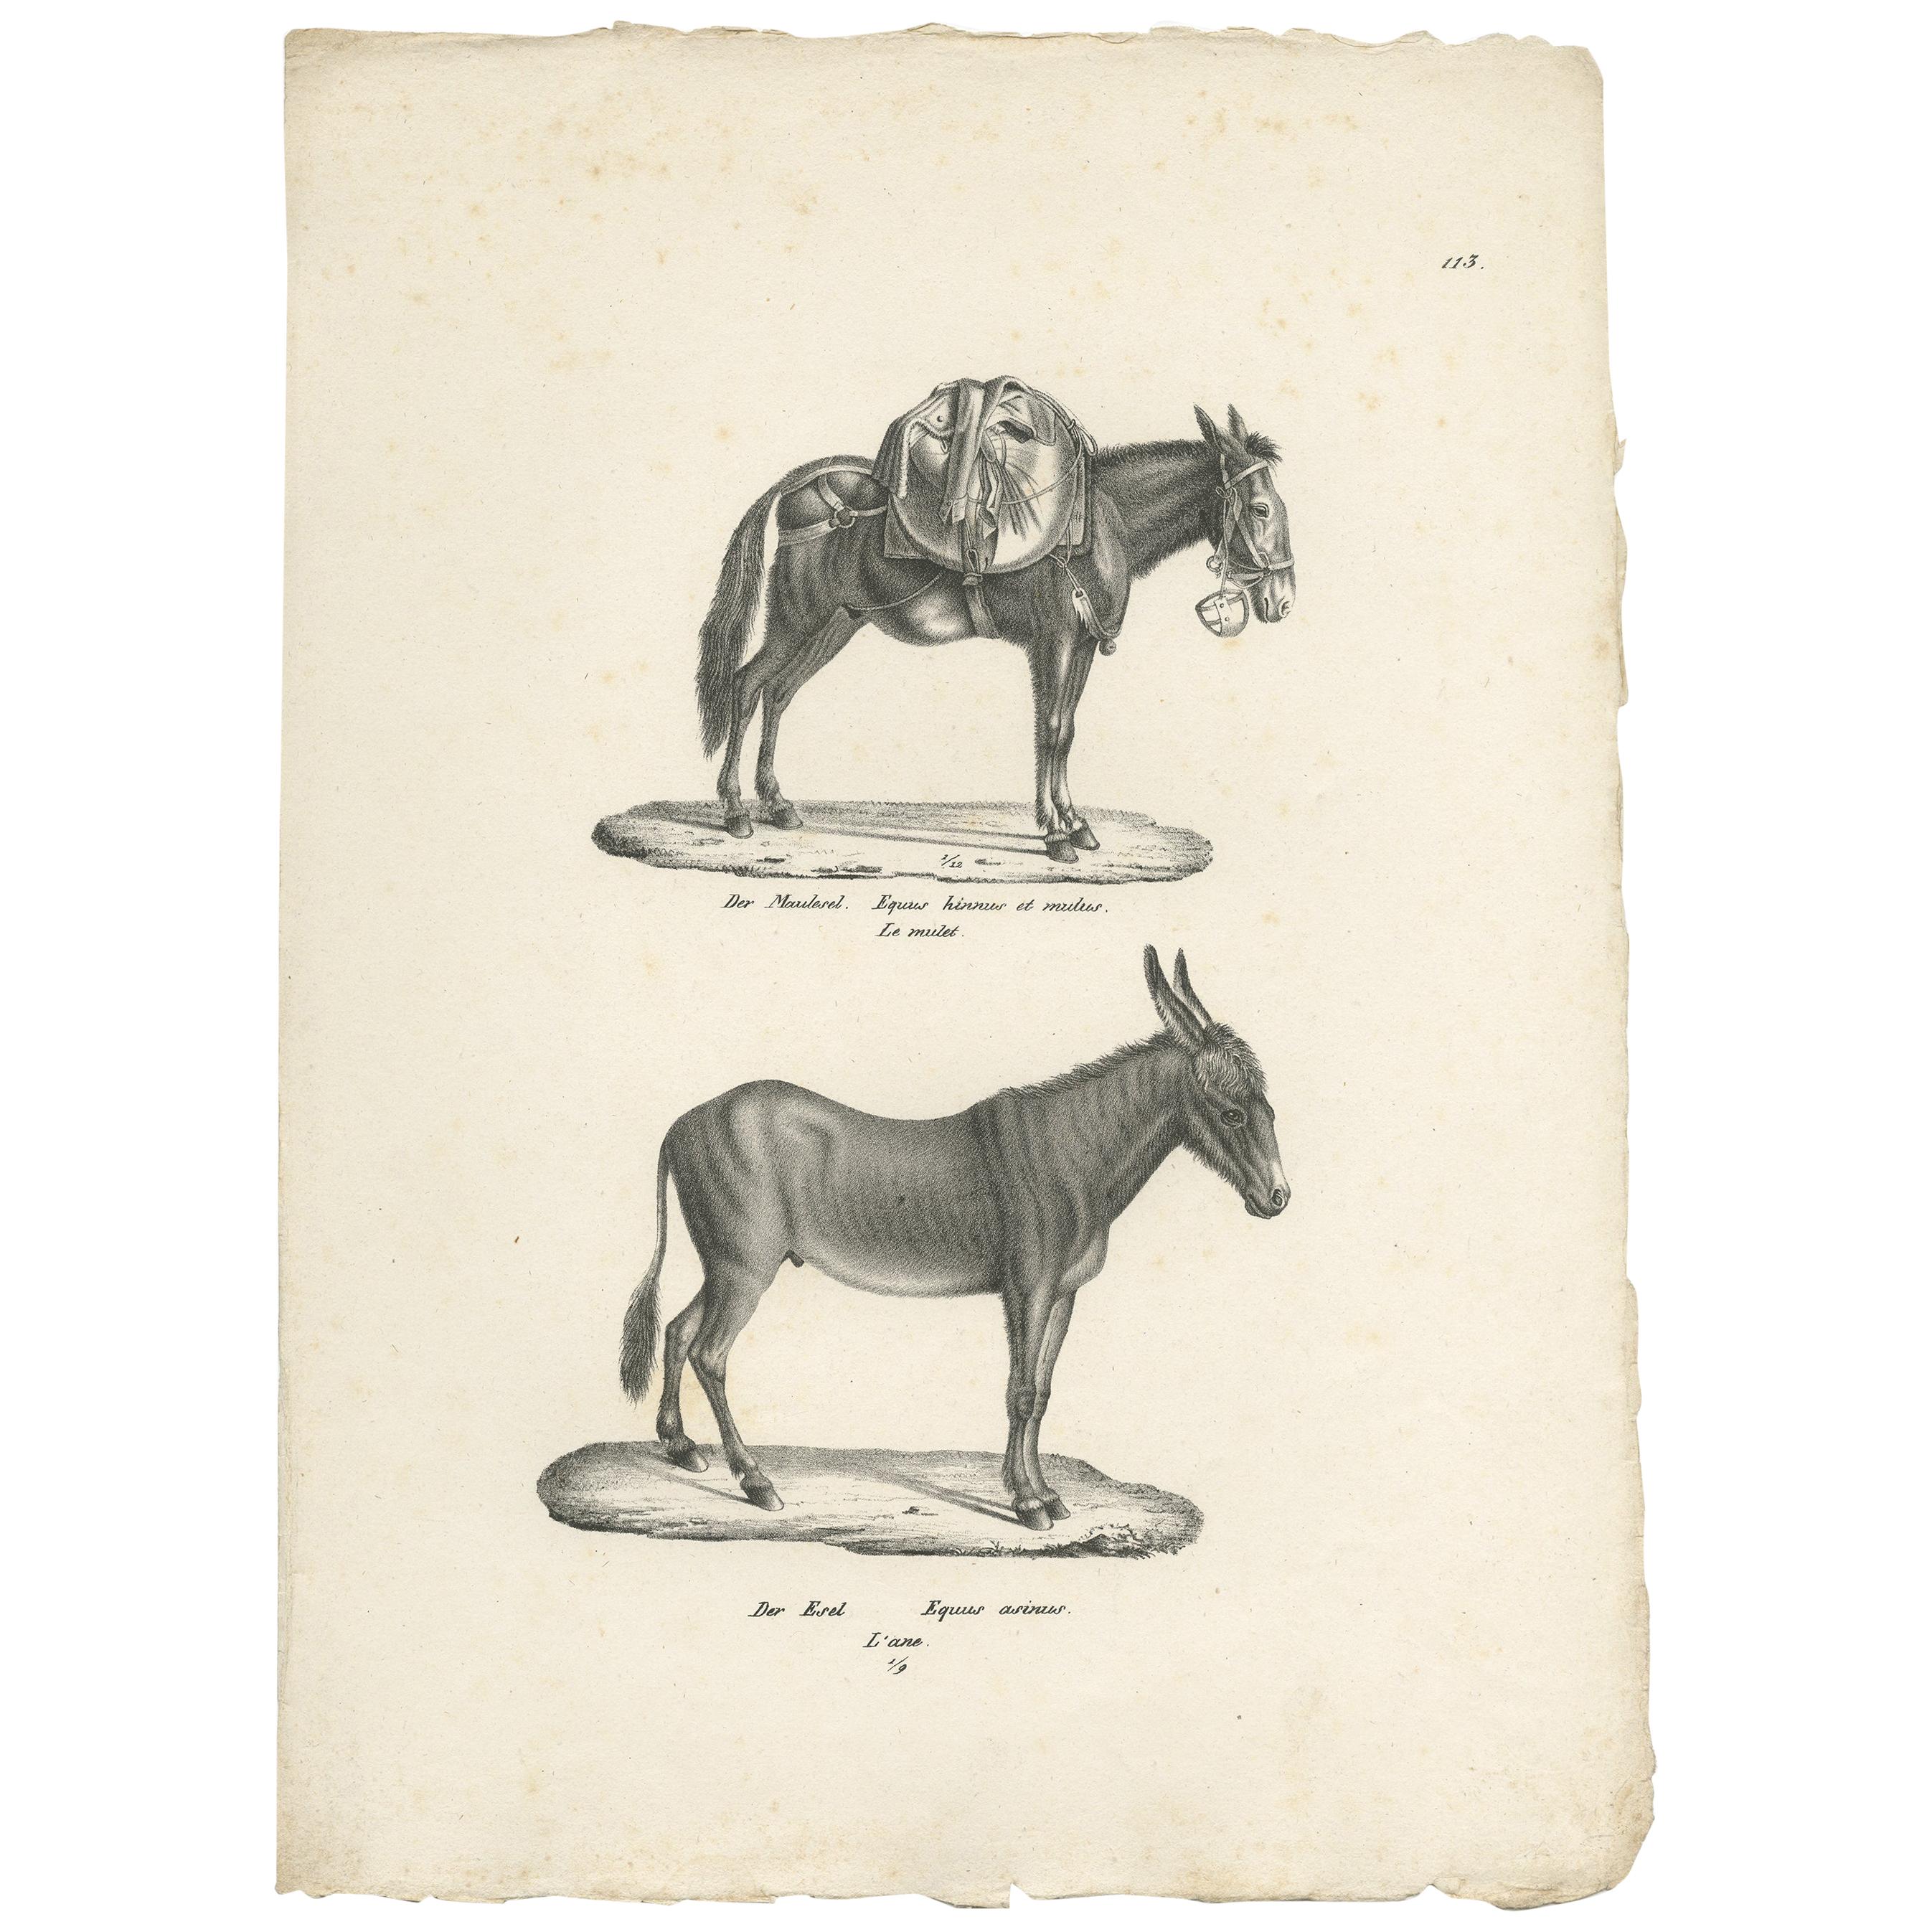 Antique Print of Donkeys by Schinz, c.1830